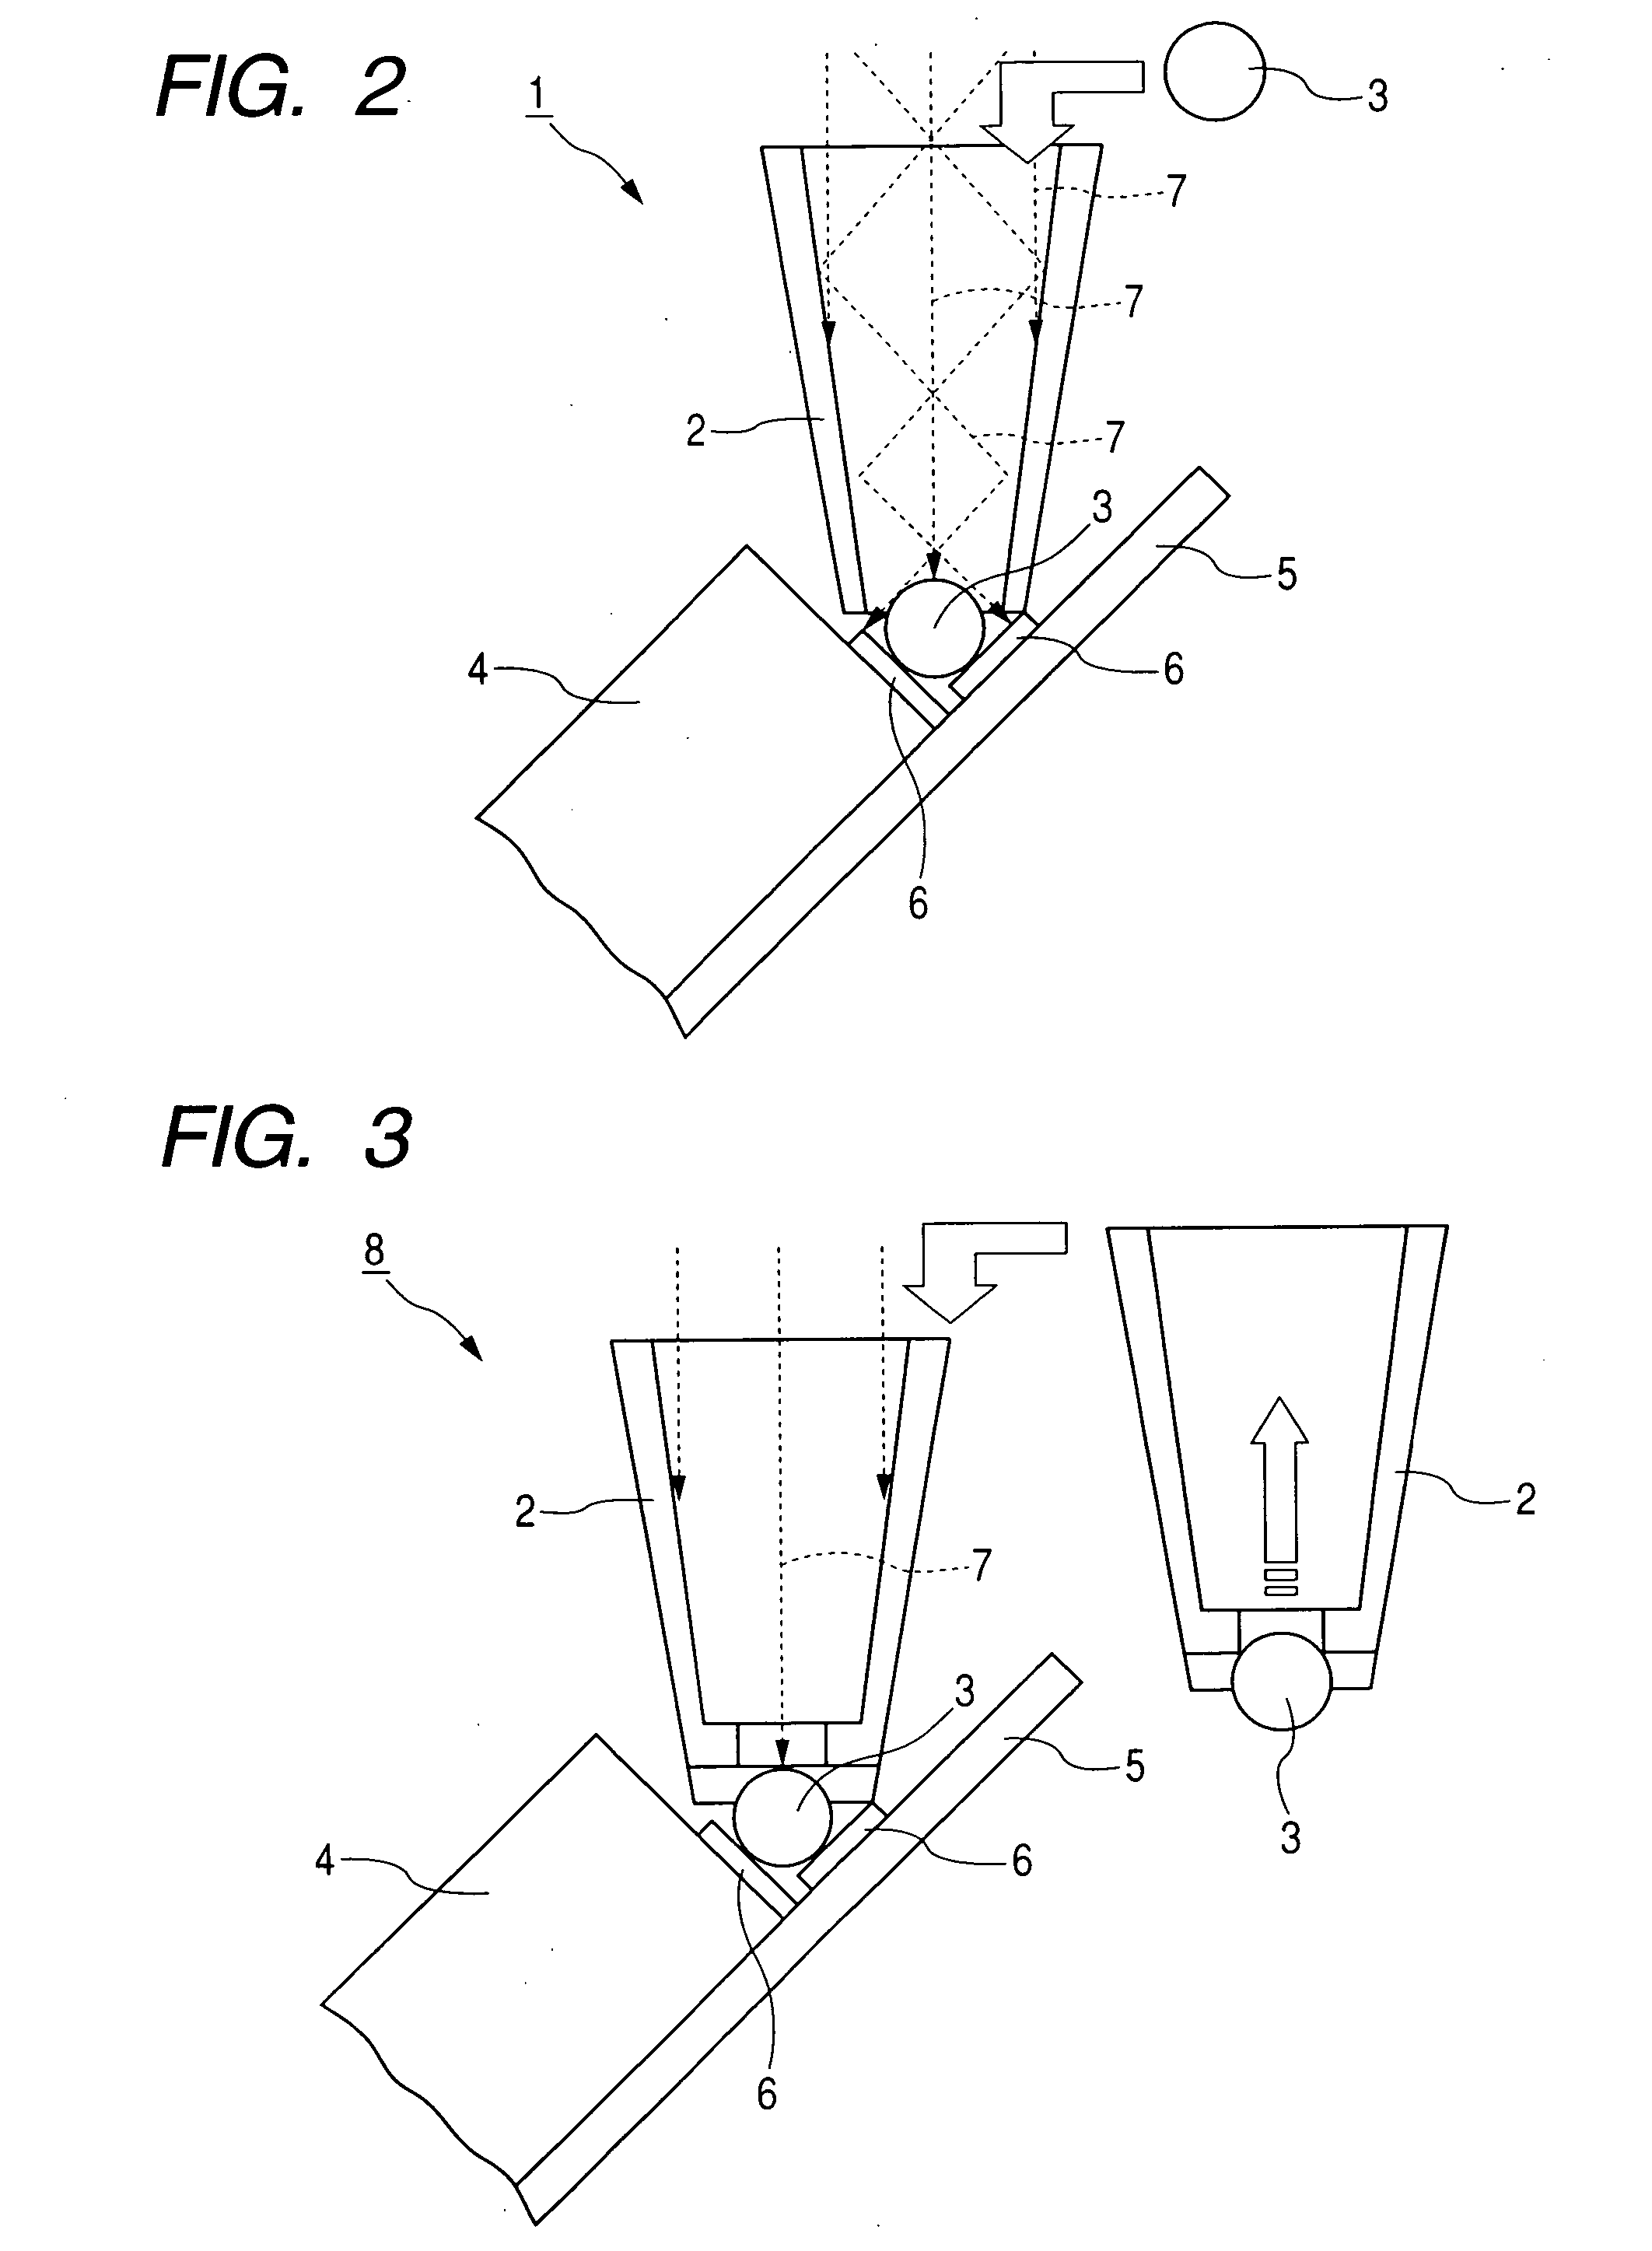 Bonding apparatus using conductive material